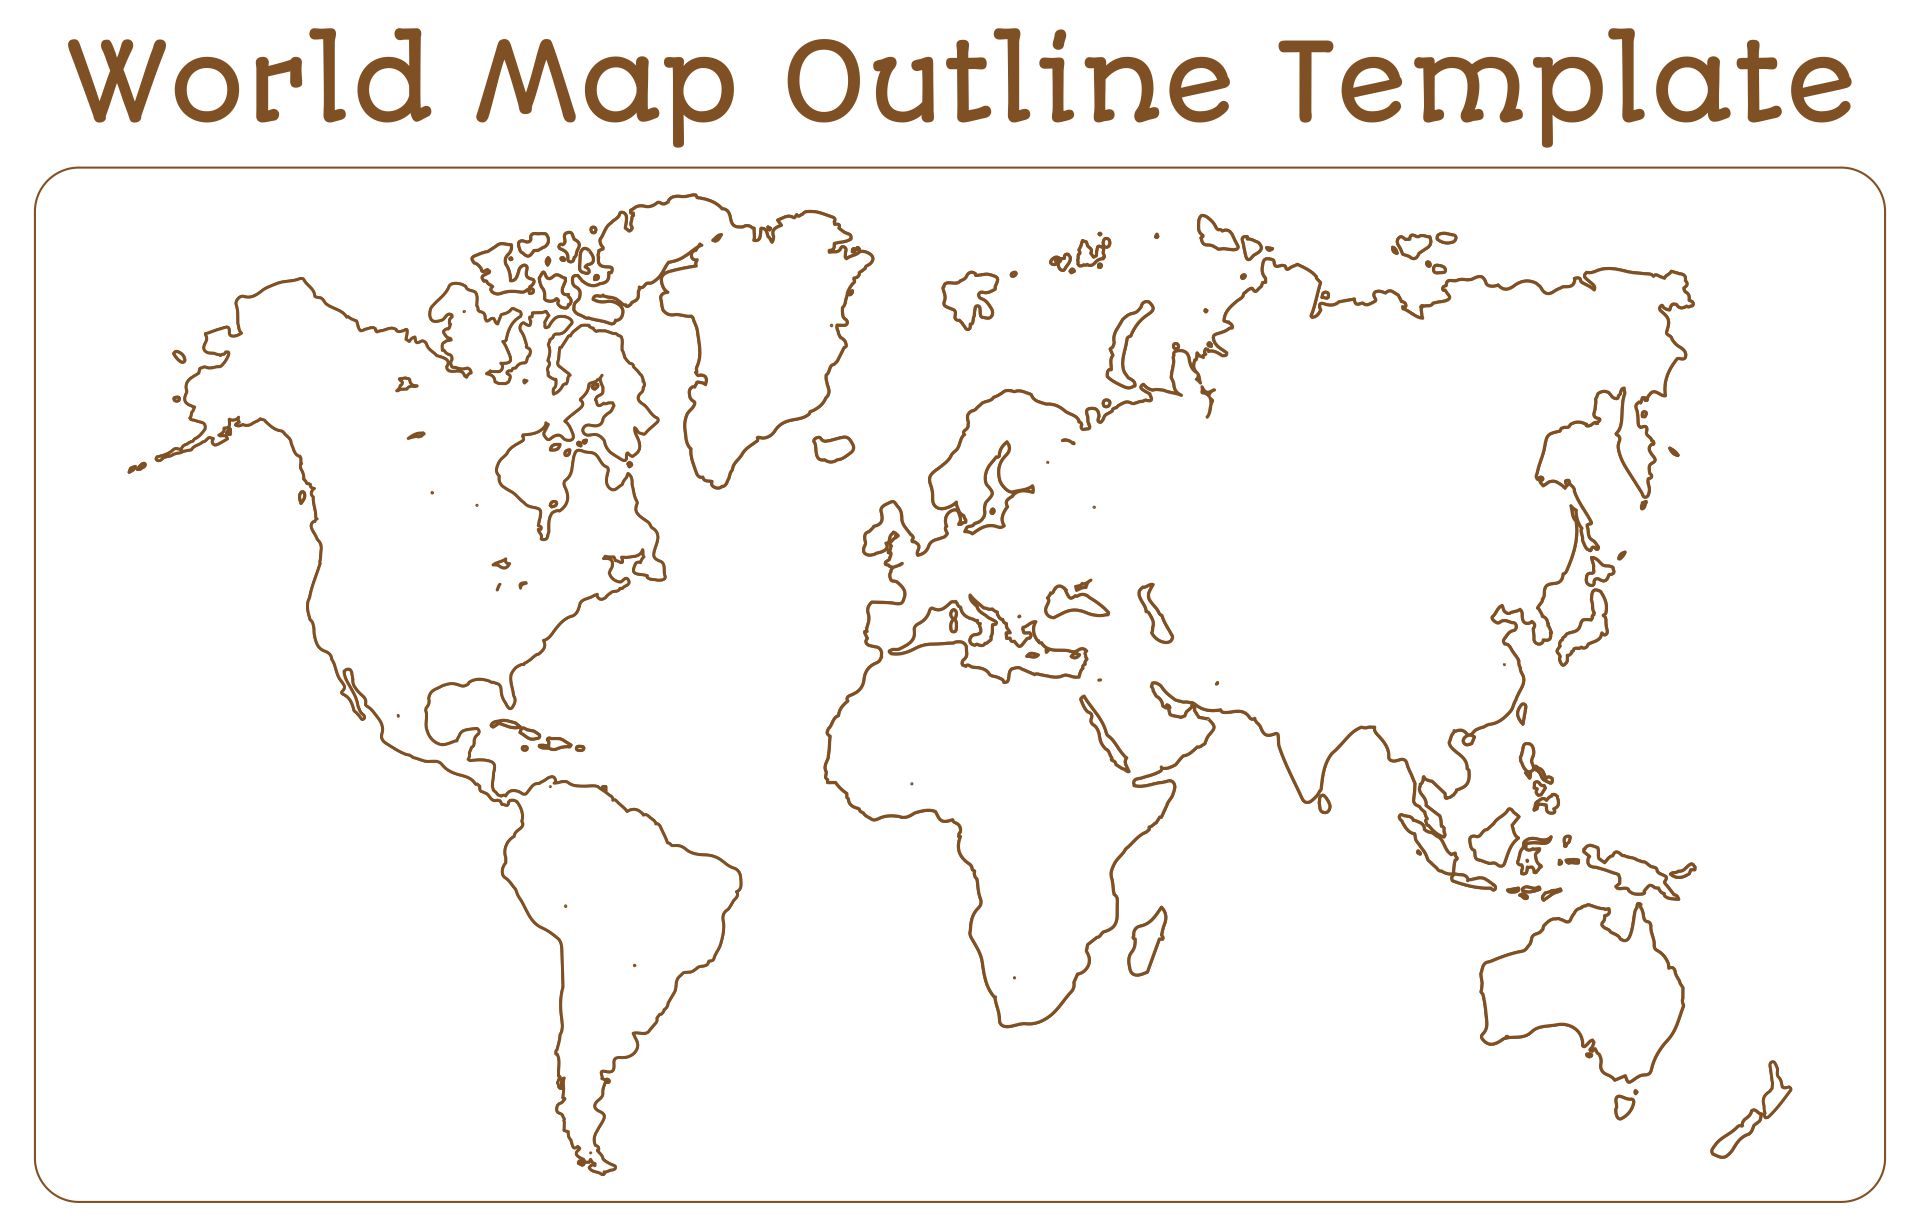 World Map outline